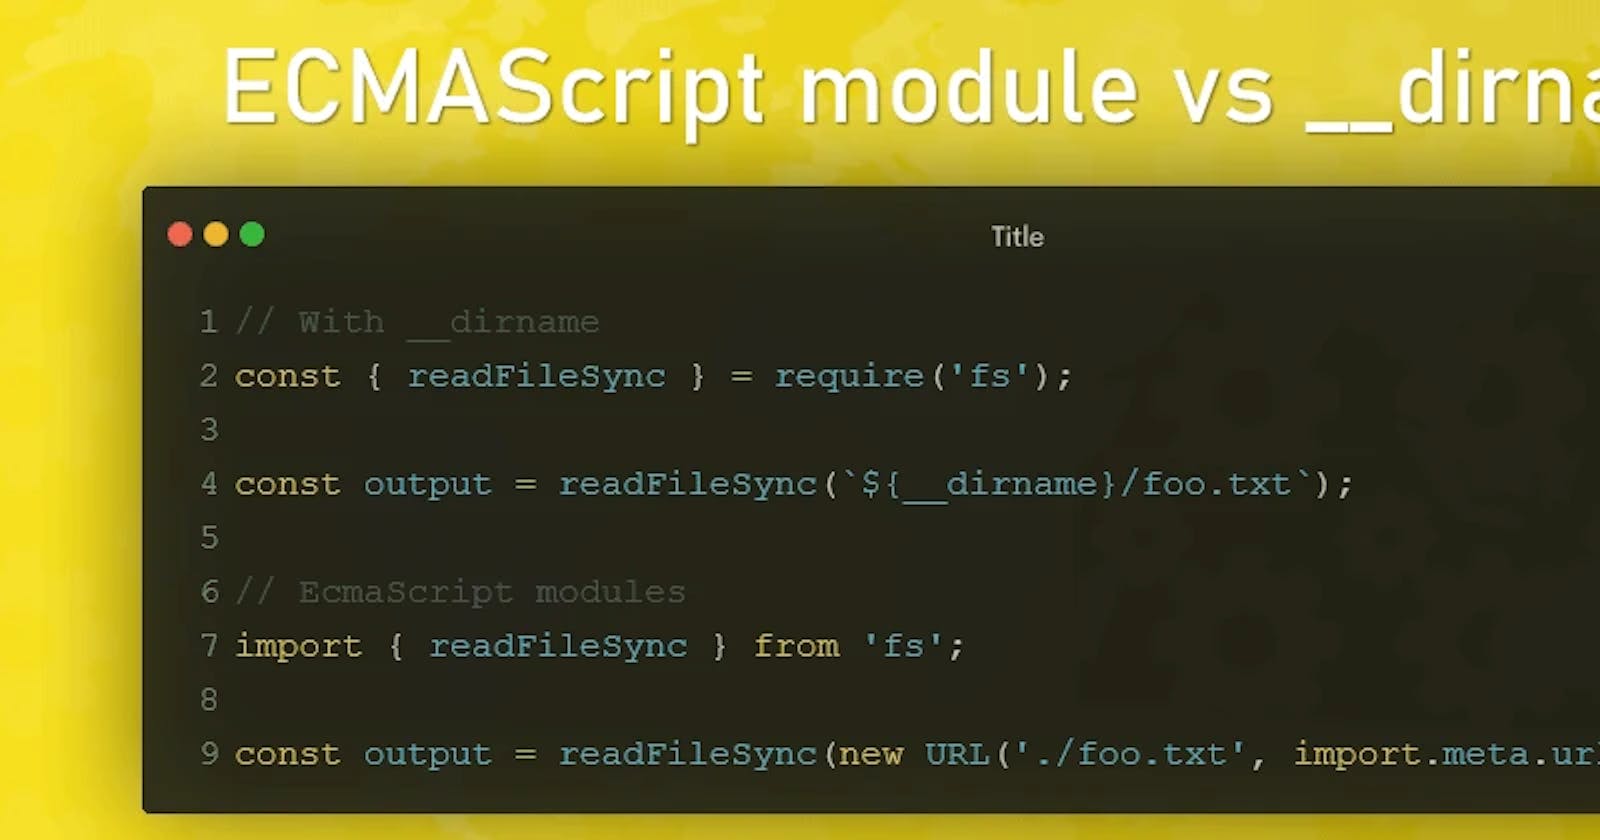 Alternative for __dirname in Node when using ECMAScript modules